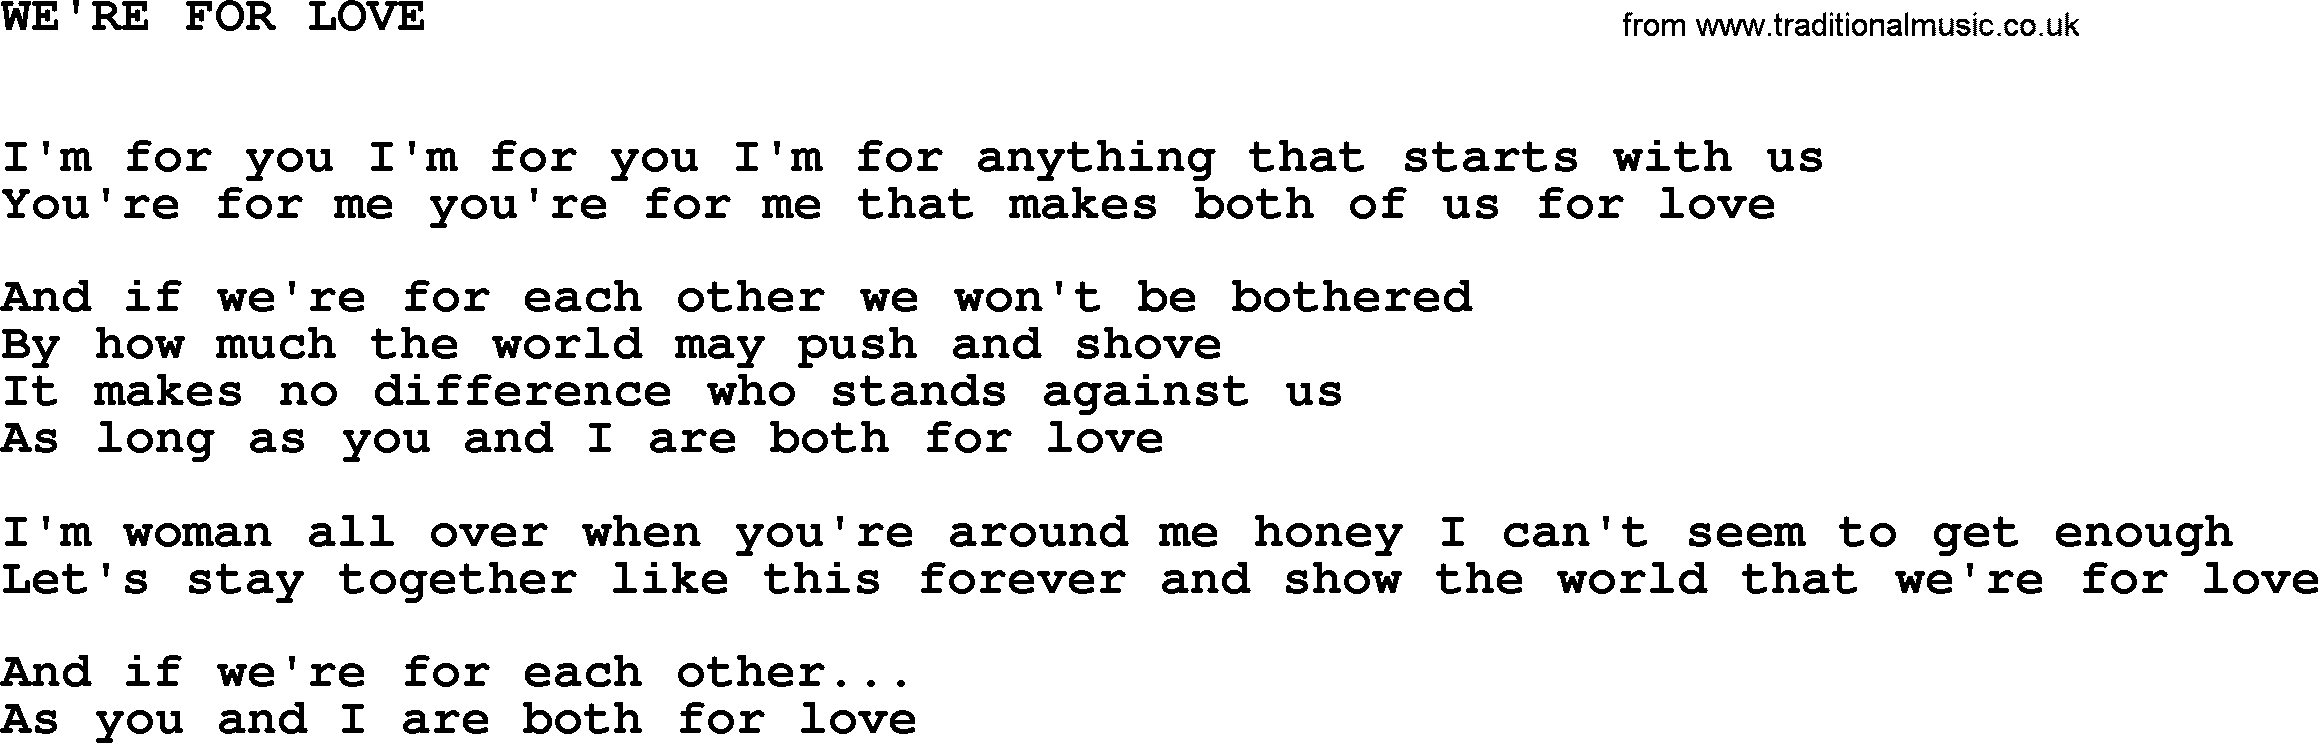 Johnny Cash song We're For Love.txt lyrics